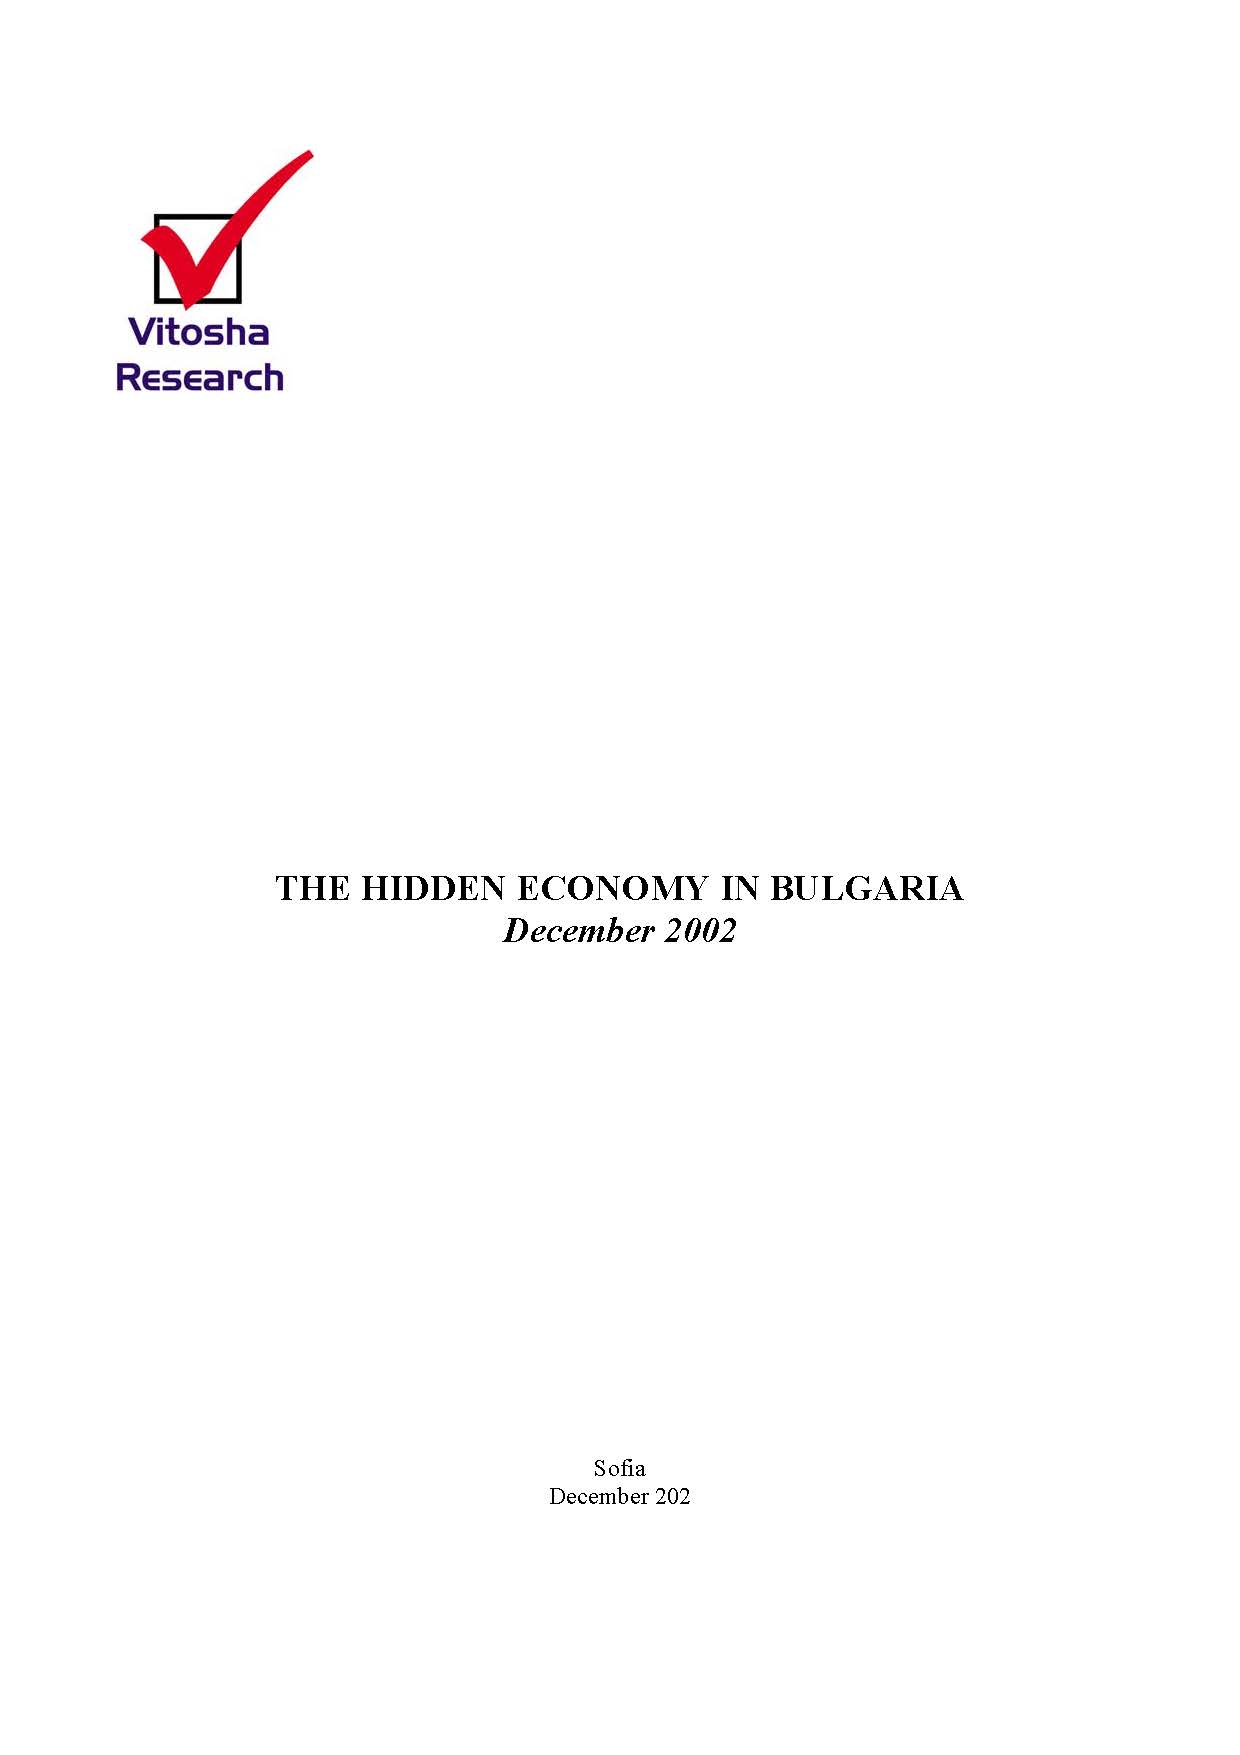 THE HIDDEN ECONOMY IN BULGARIA (General Population), December 2002